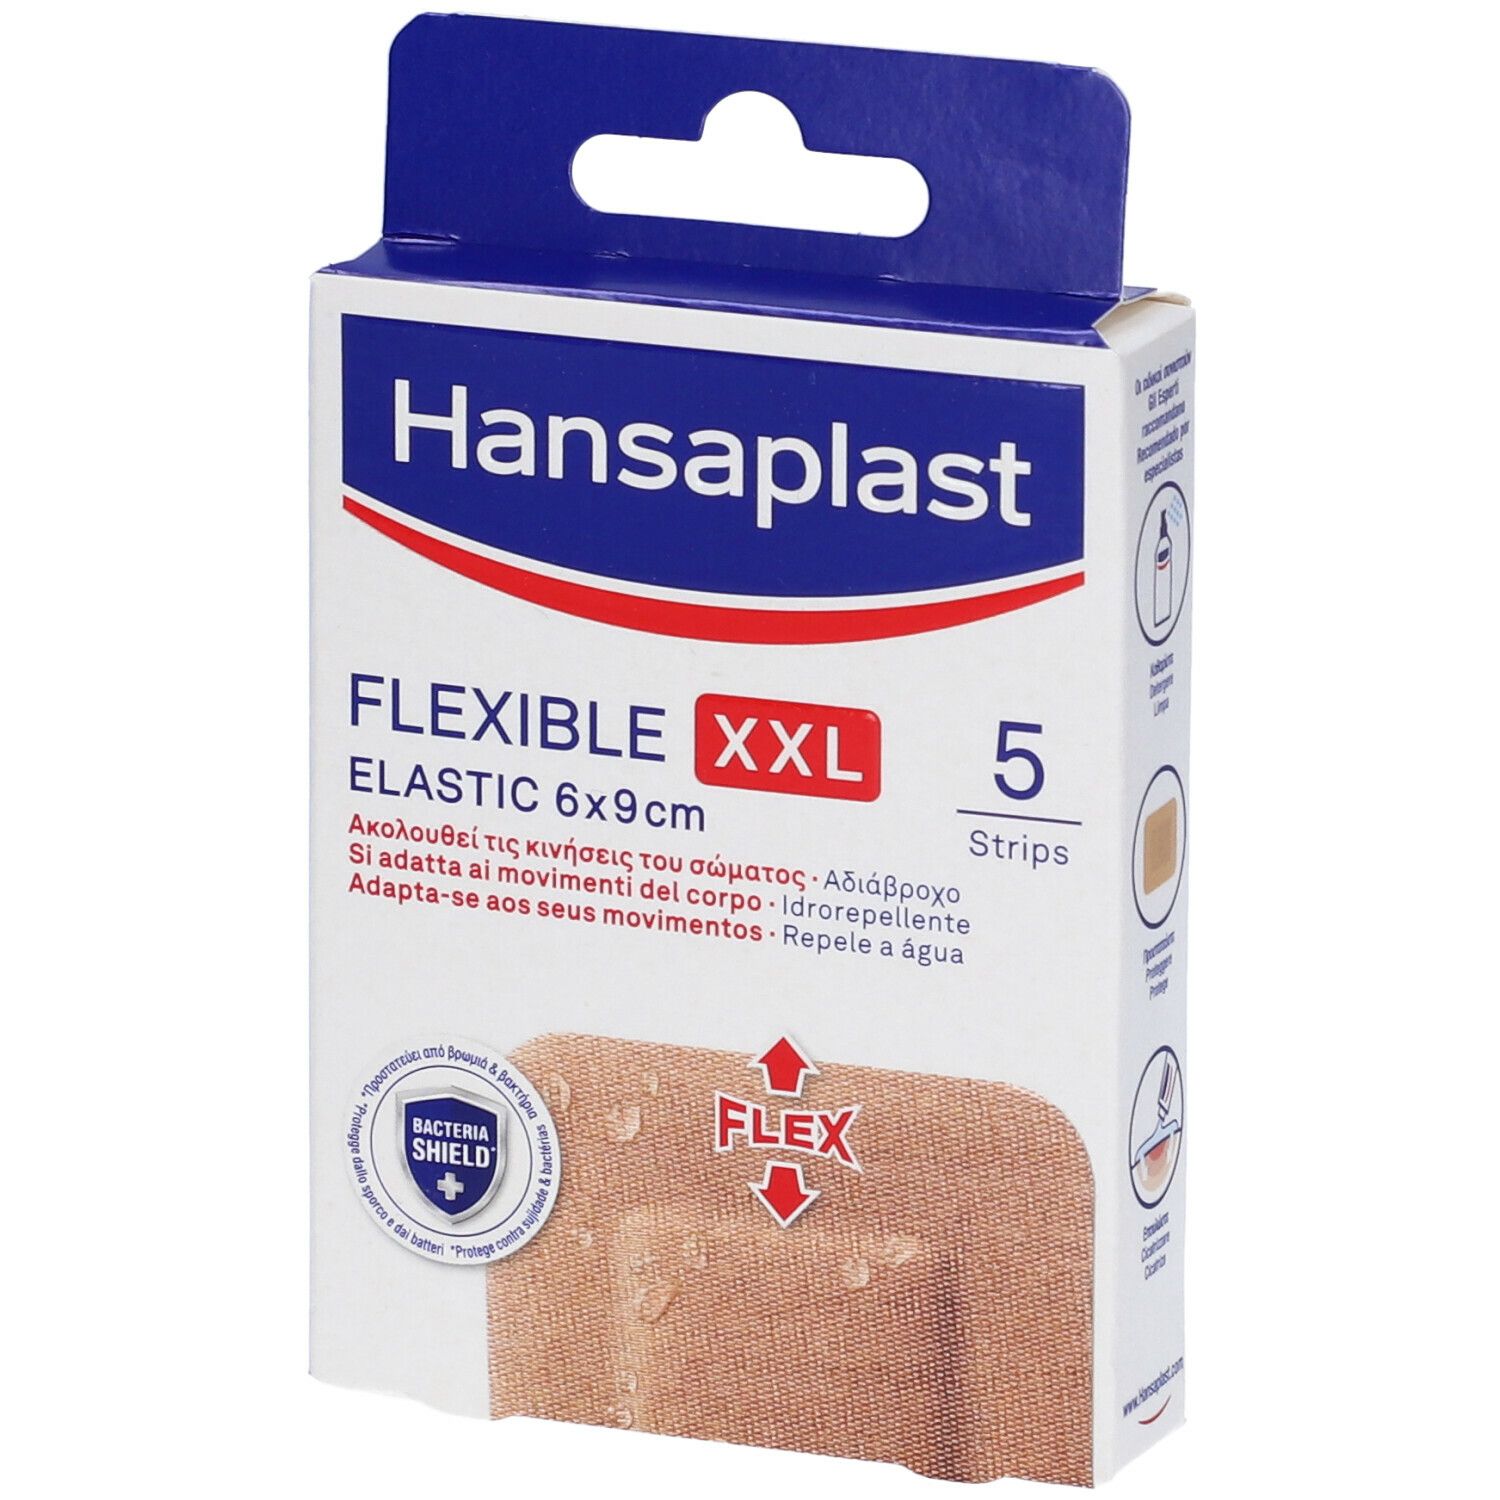 Hansaplast Flexible XXL Elastic 6x9 cm